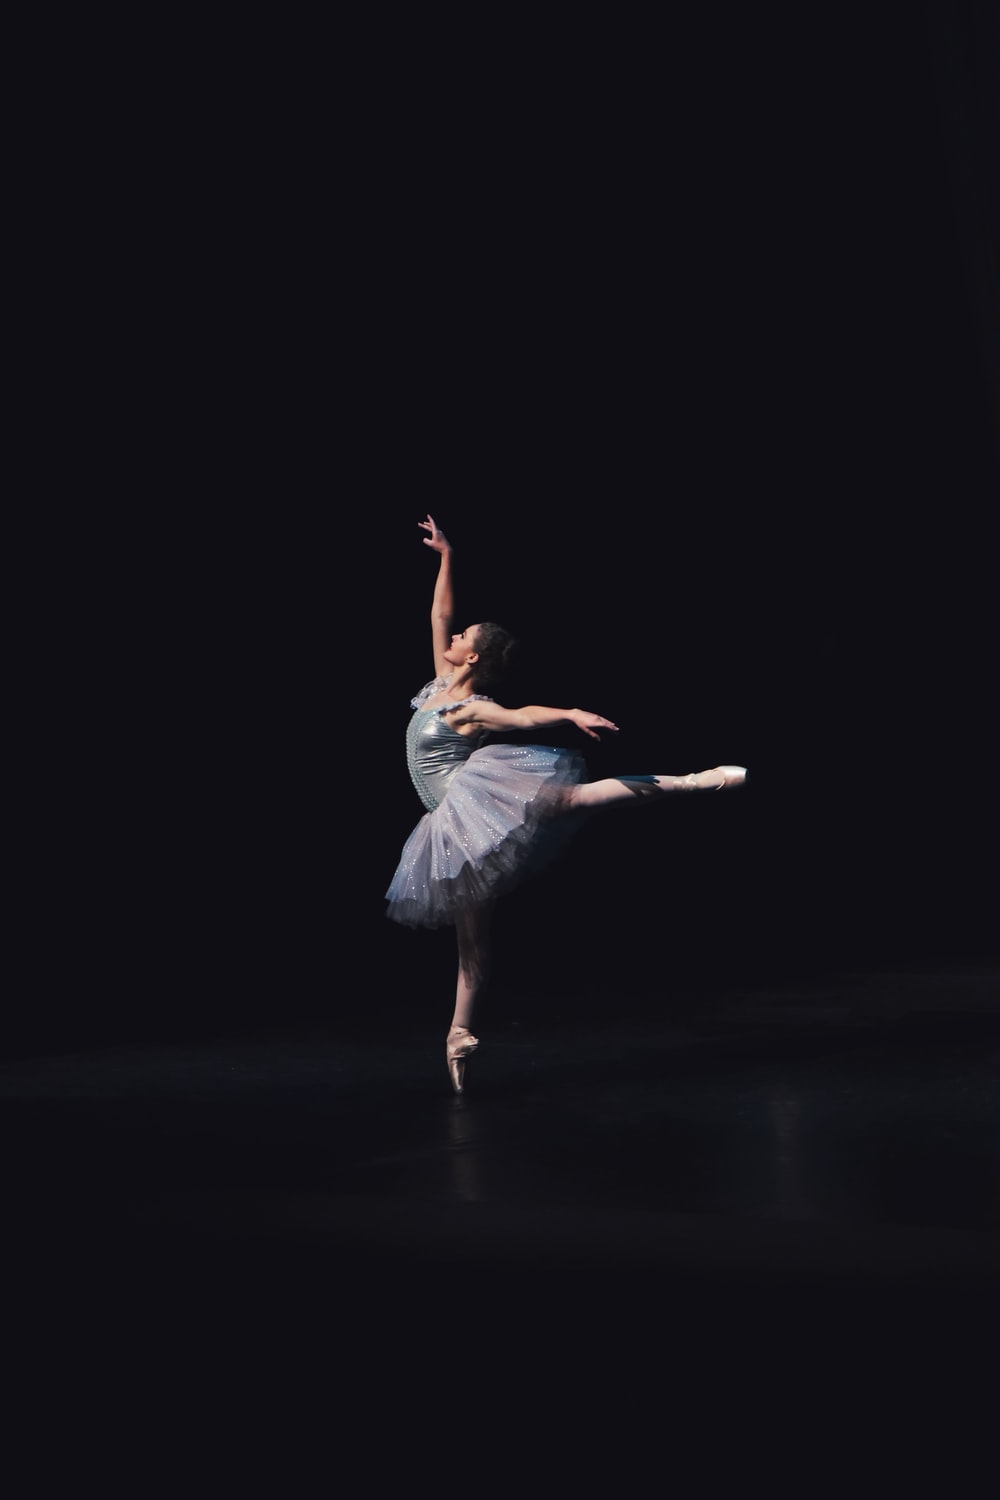 Ballet Dancers Picture. Download Free Image